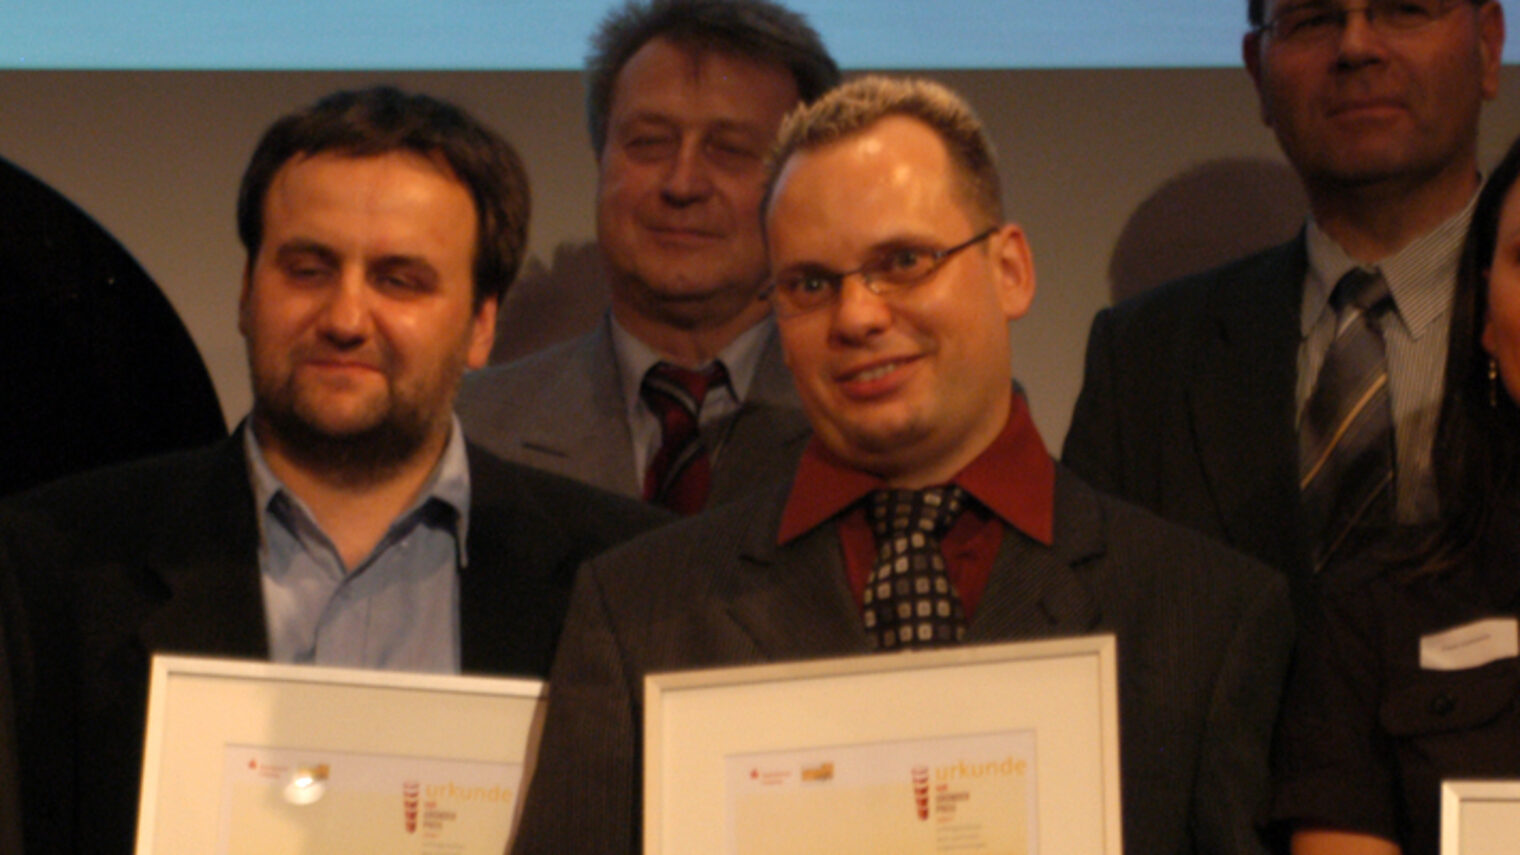 ugb-Gründerpreis 2007